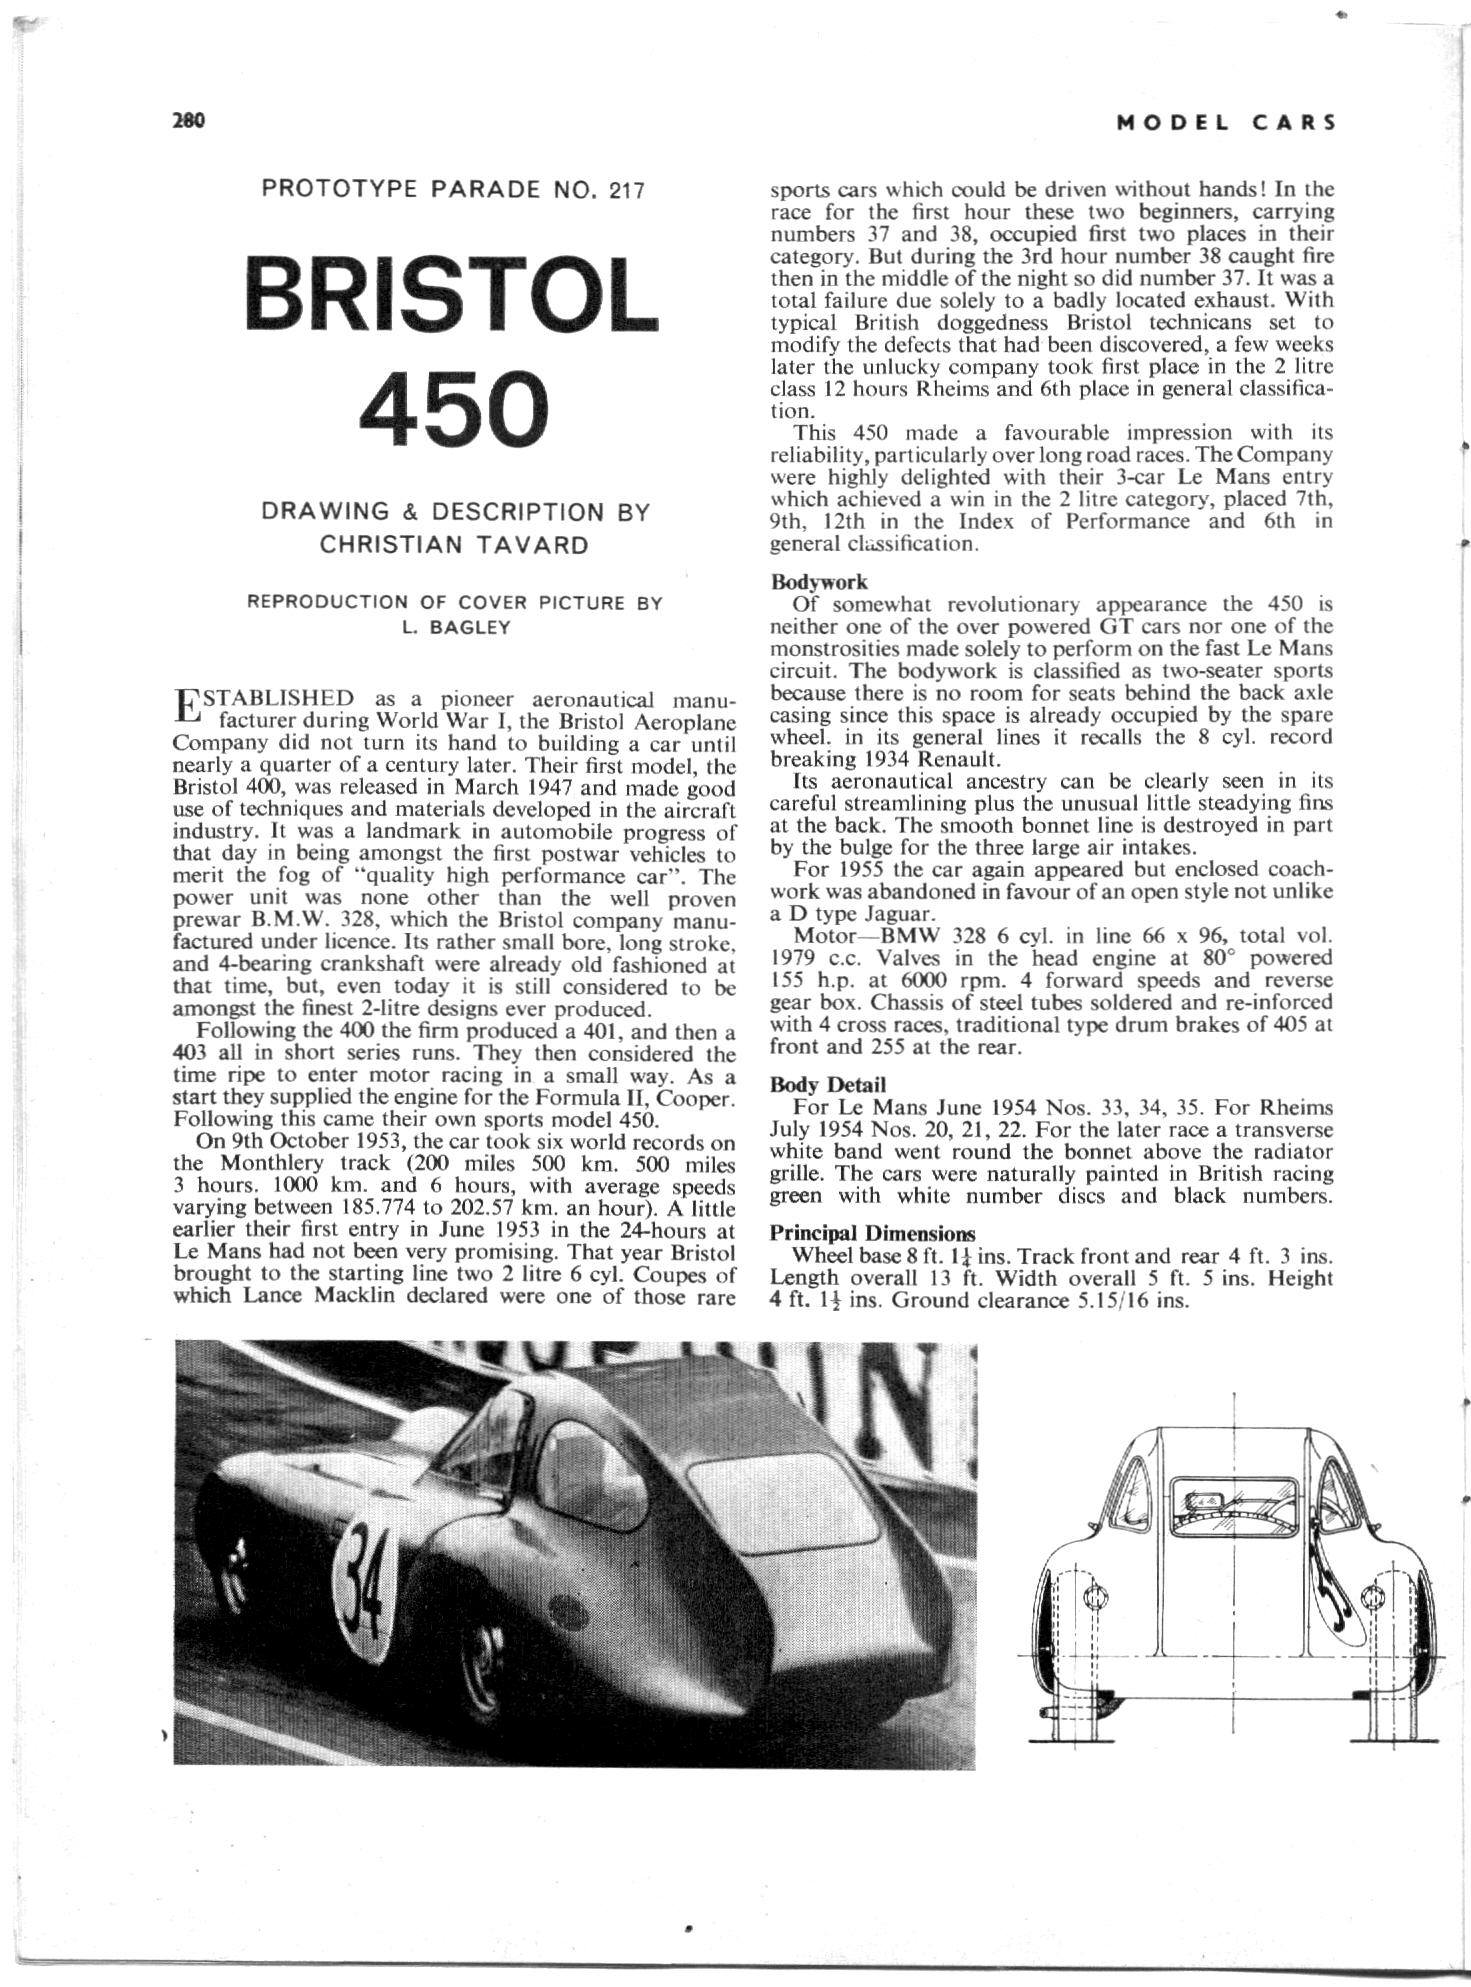 Bristol 450